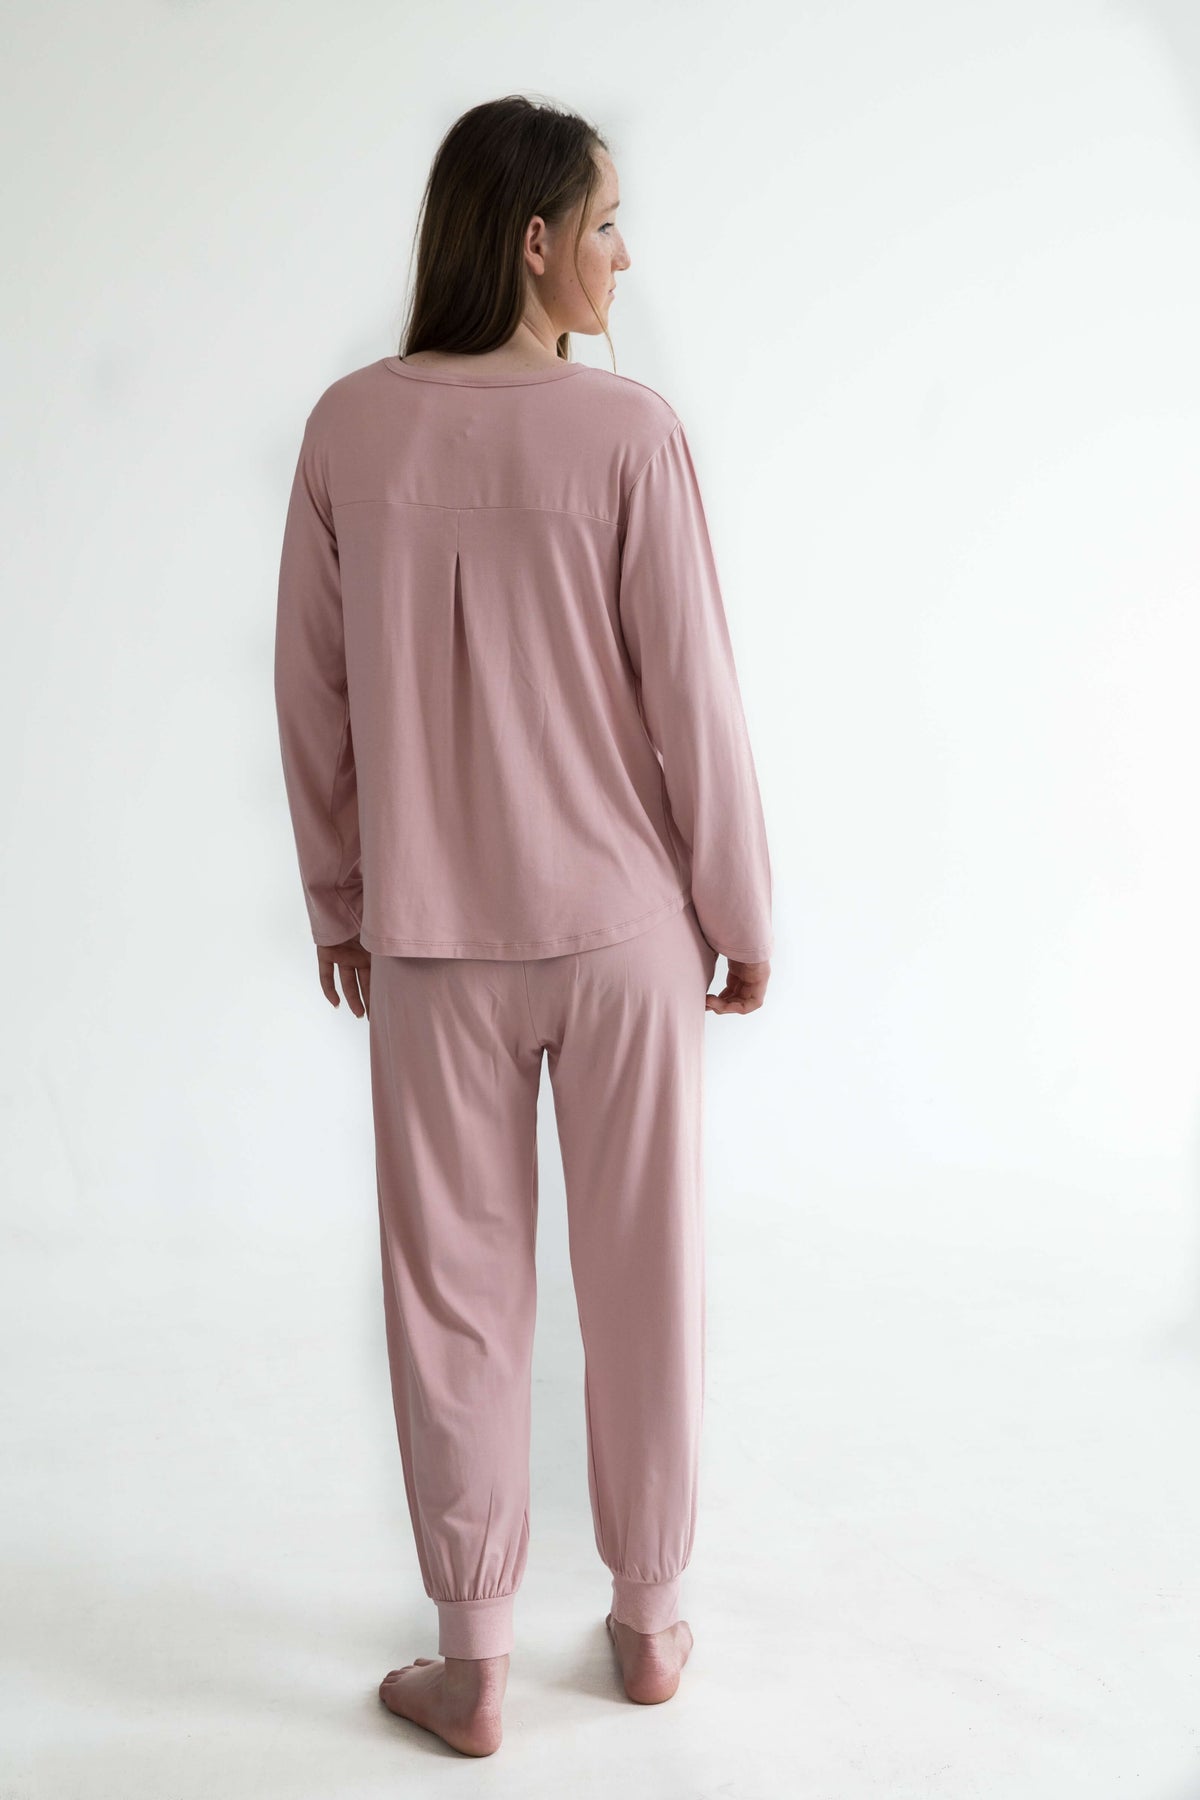 pink girls winter pyjamas set long pants and long sleeve top by Love Haidee Australia back